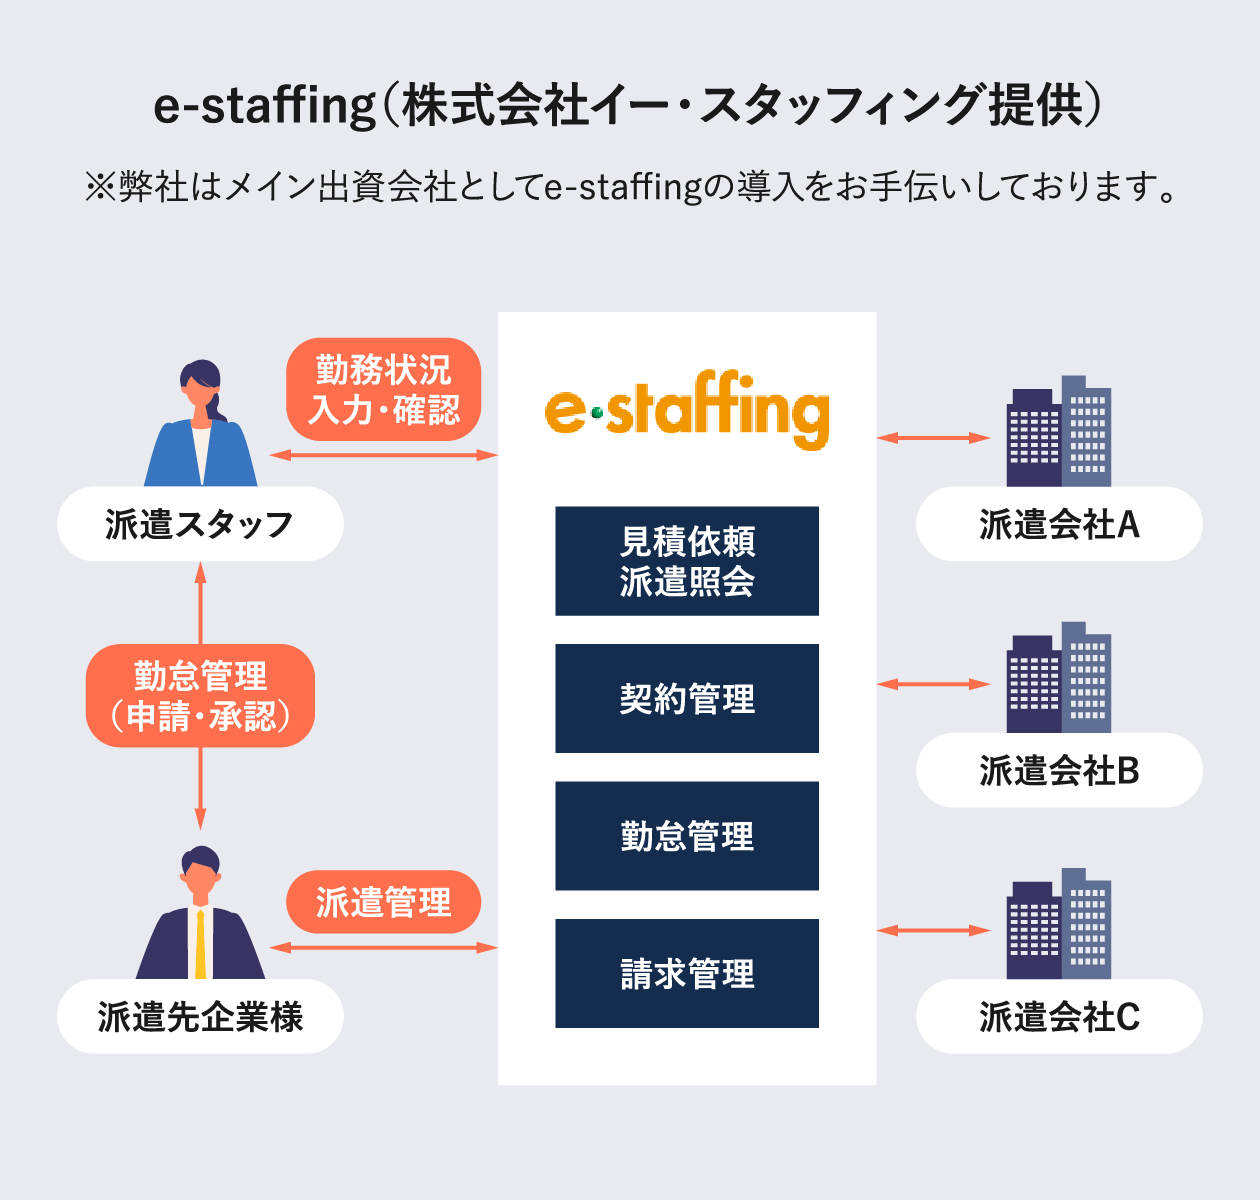 e-staffing（株式会社イー・スタッフィング提供）